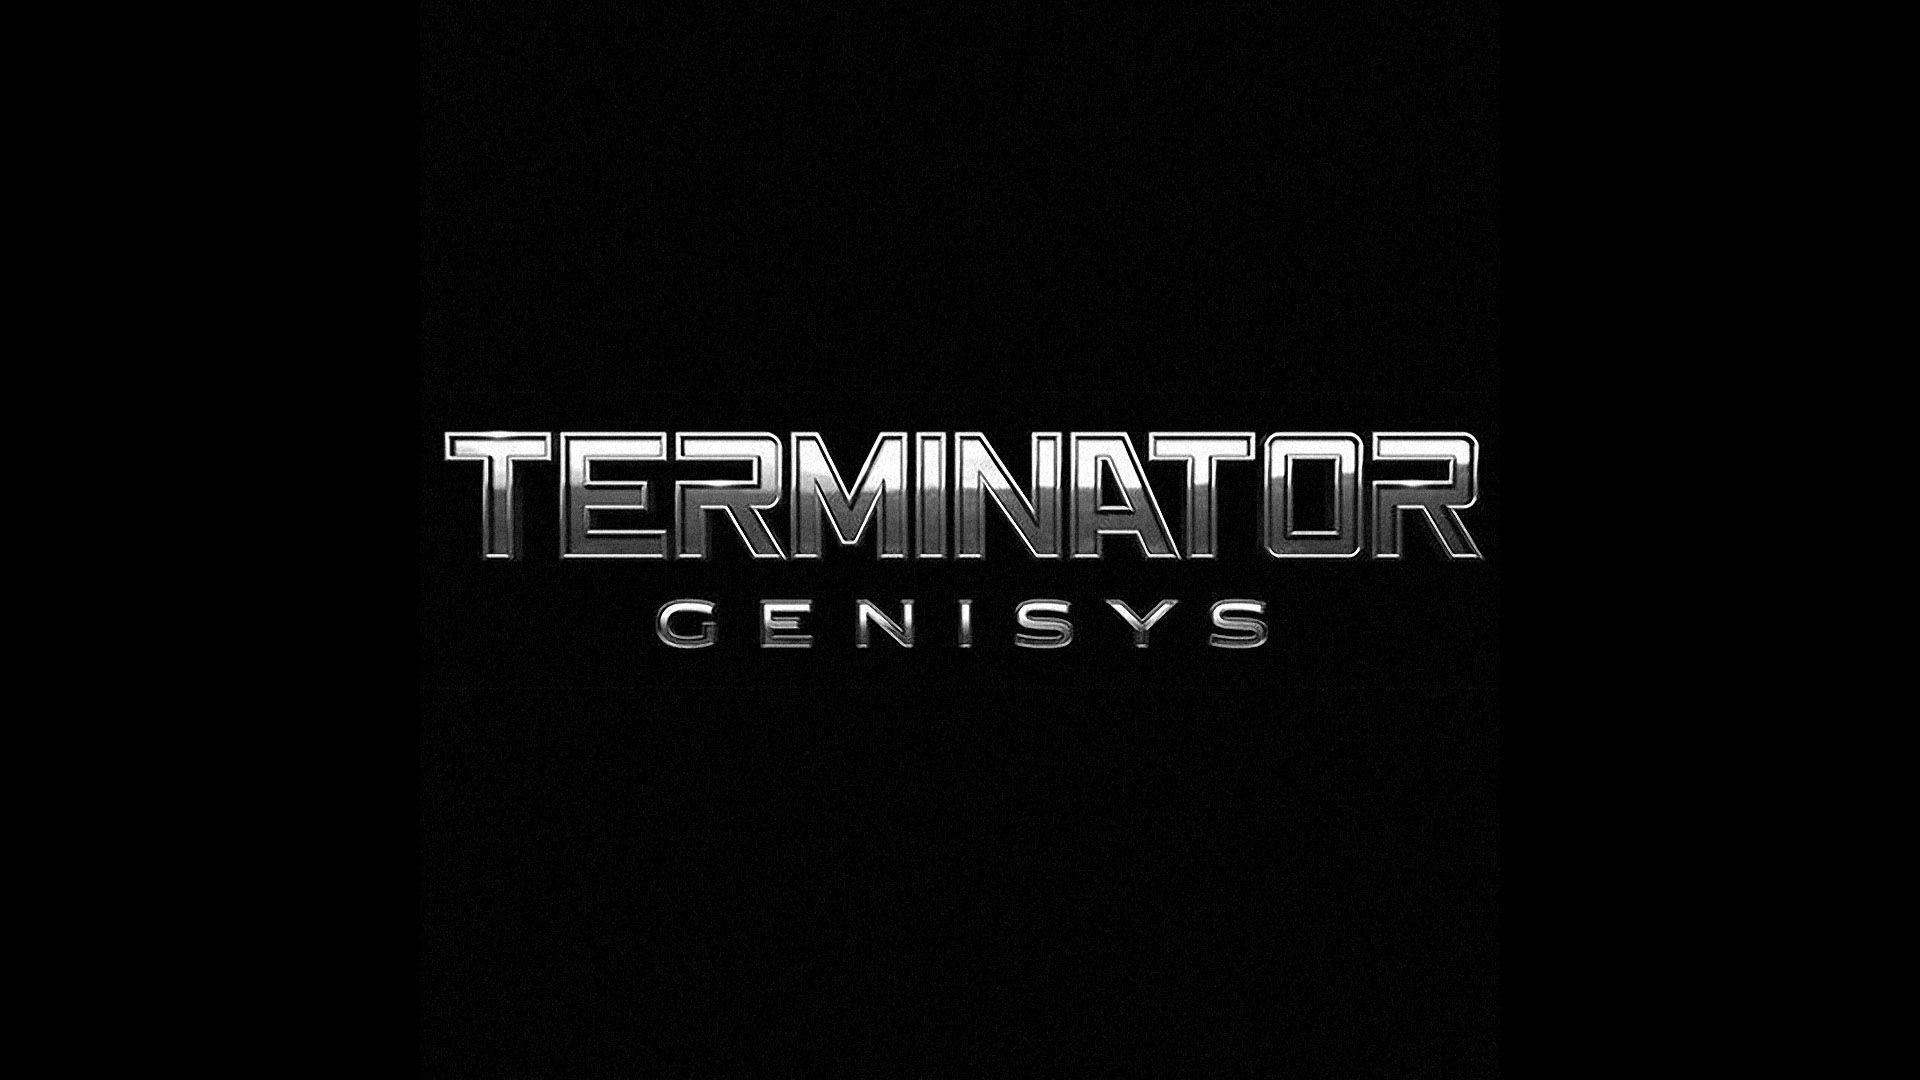 Terminator: Genisys 2015 Movie Logo Wallpaper Wide or HD. Movies